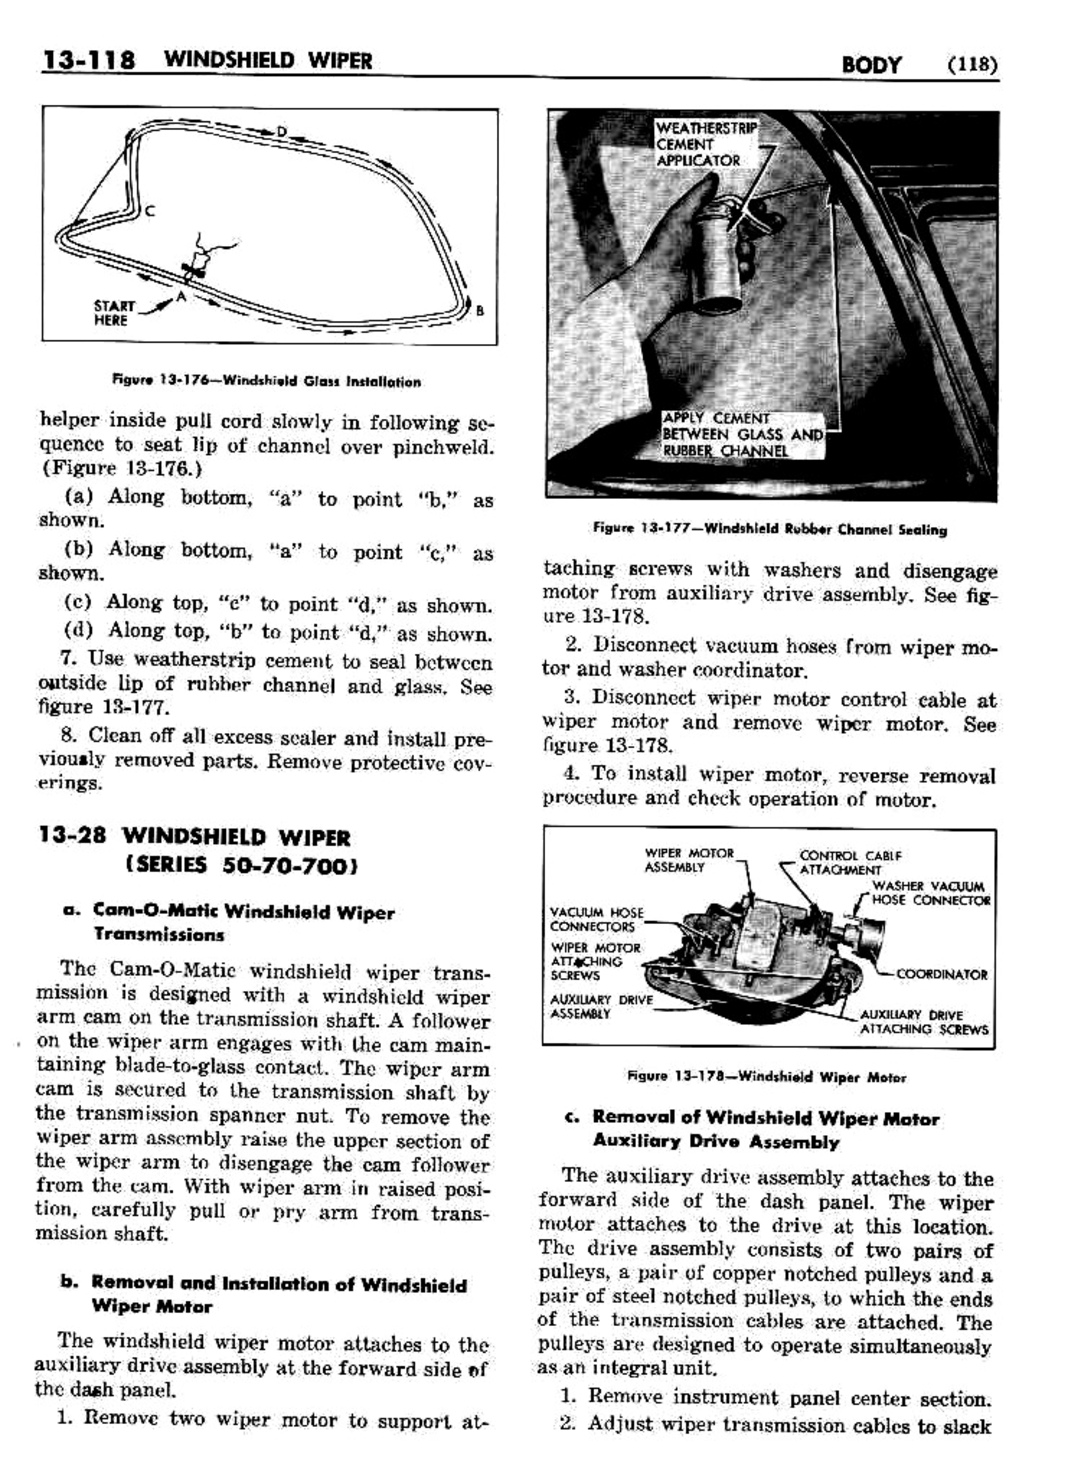 n_1958 Buick Body Service Manual-119-119.jpg